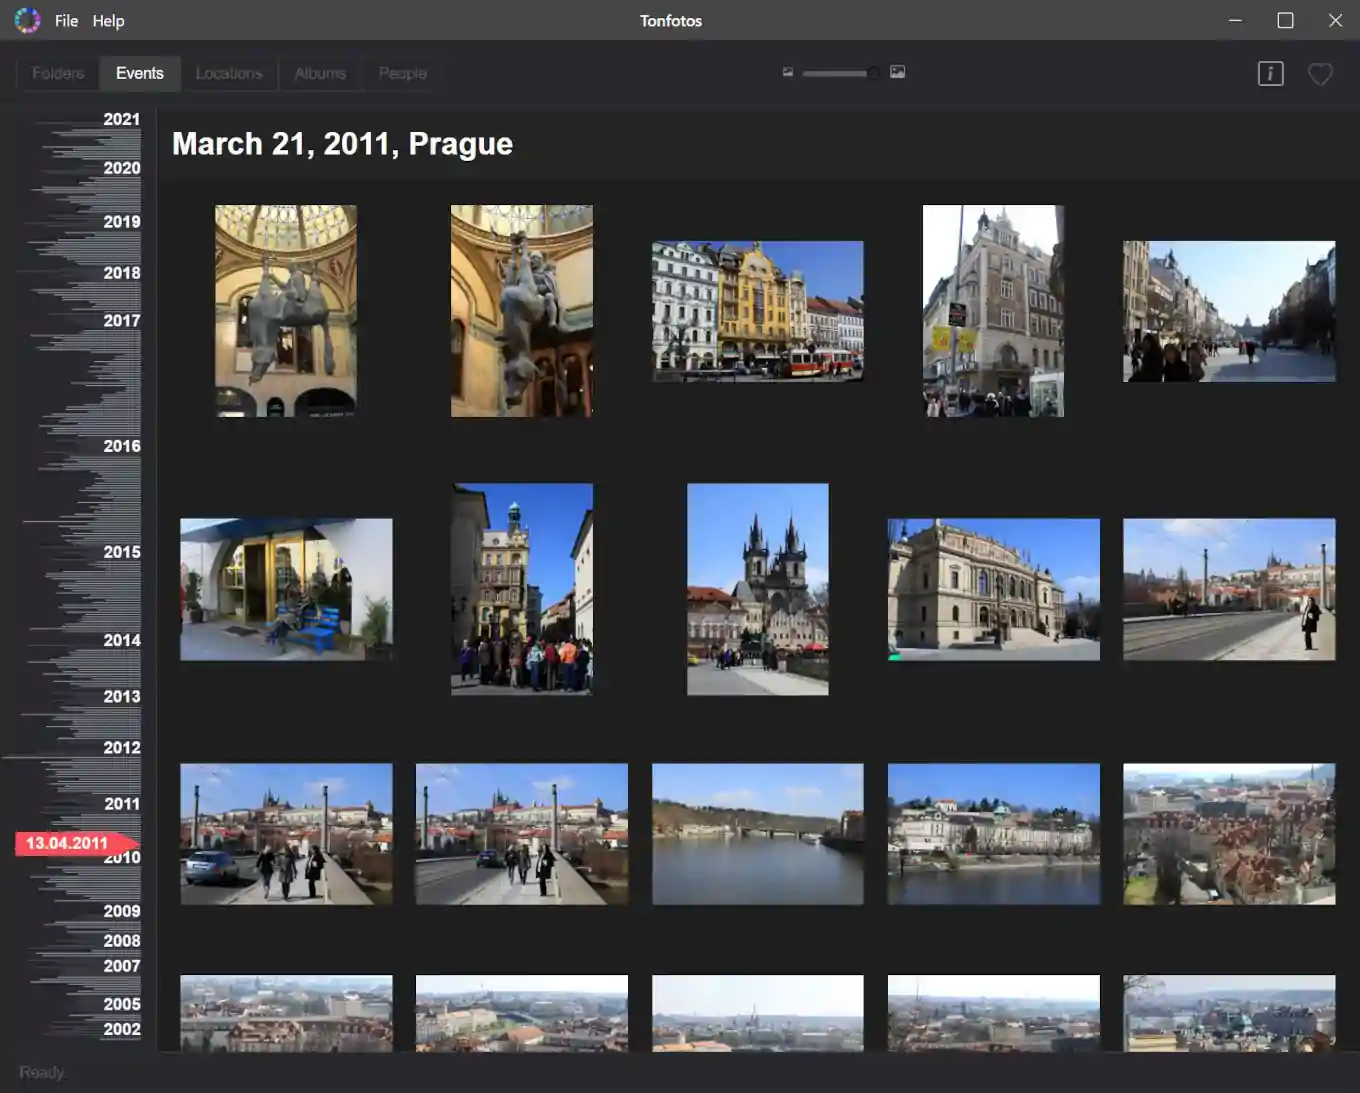 Timeline interface of Tonfotos Image Viewer - Prague event